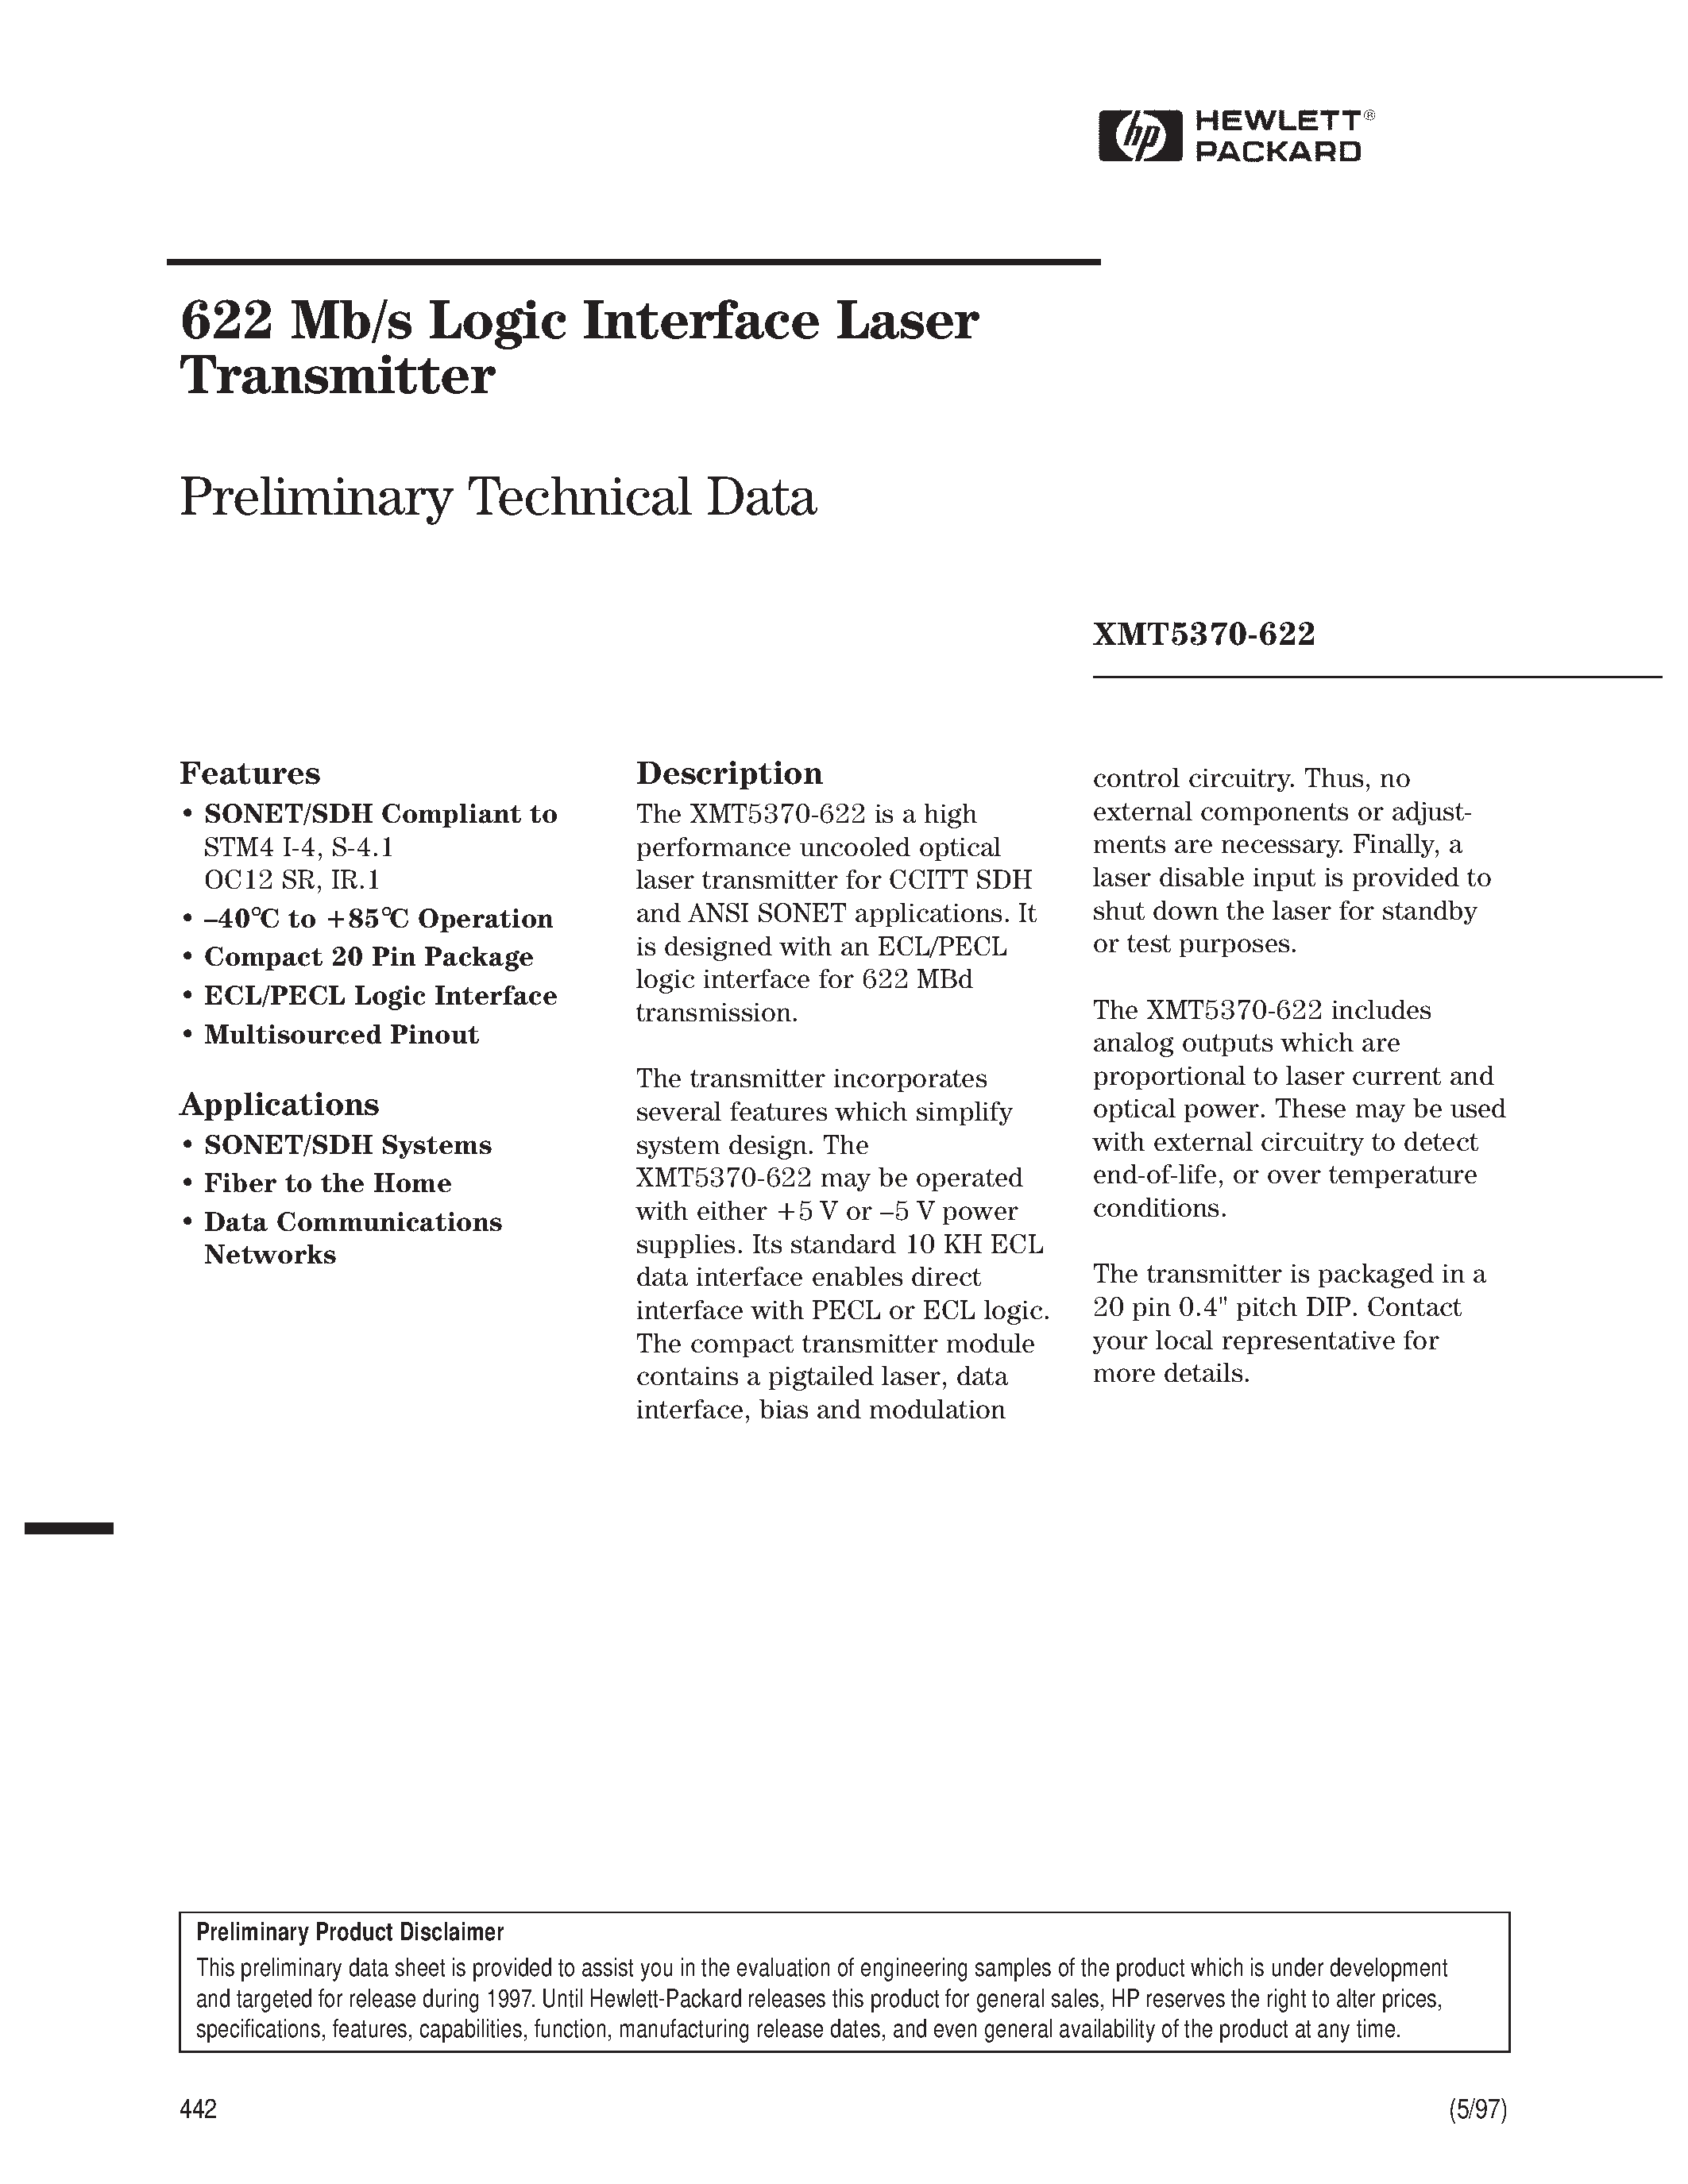 Datasheet XMT5160A-155-ST - 622 Mb/s Logic Interface Laser Transmitter page 1